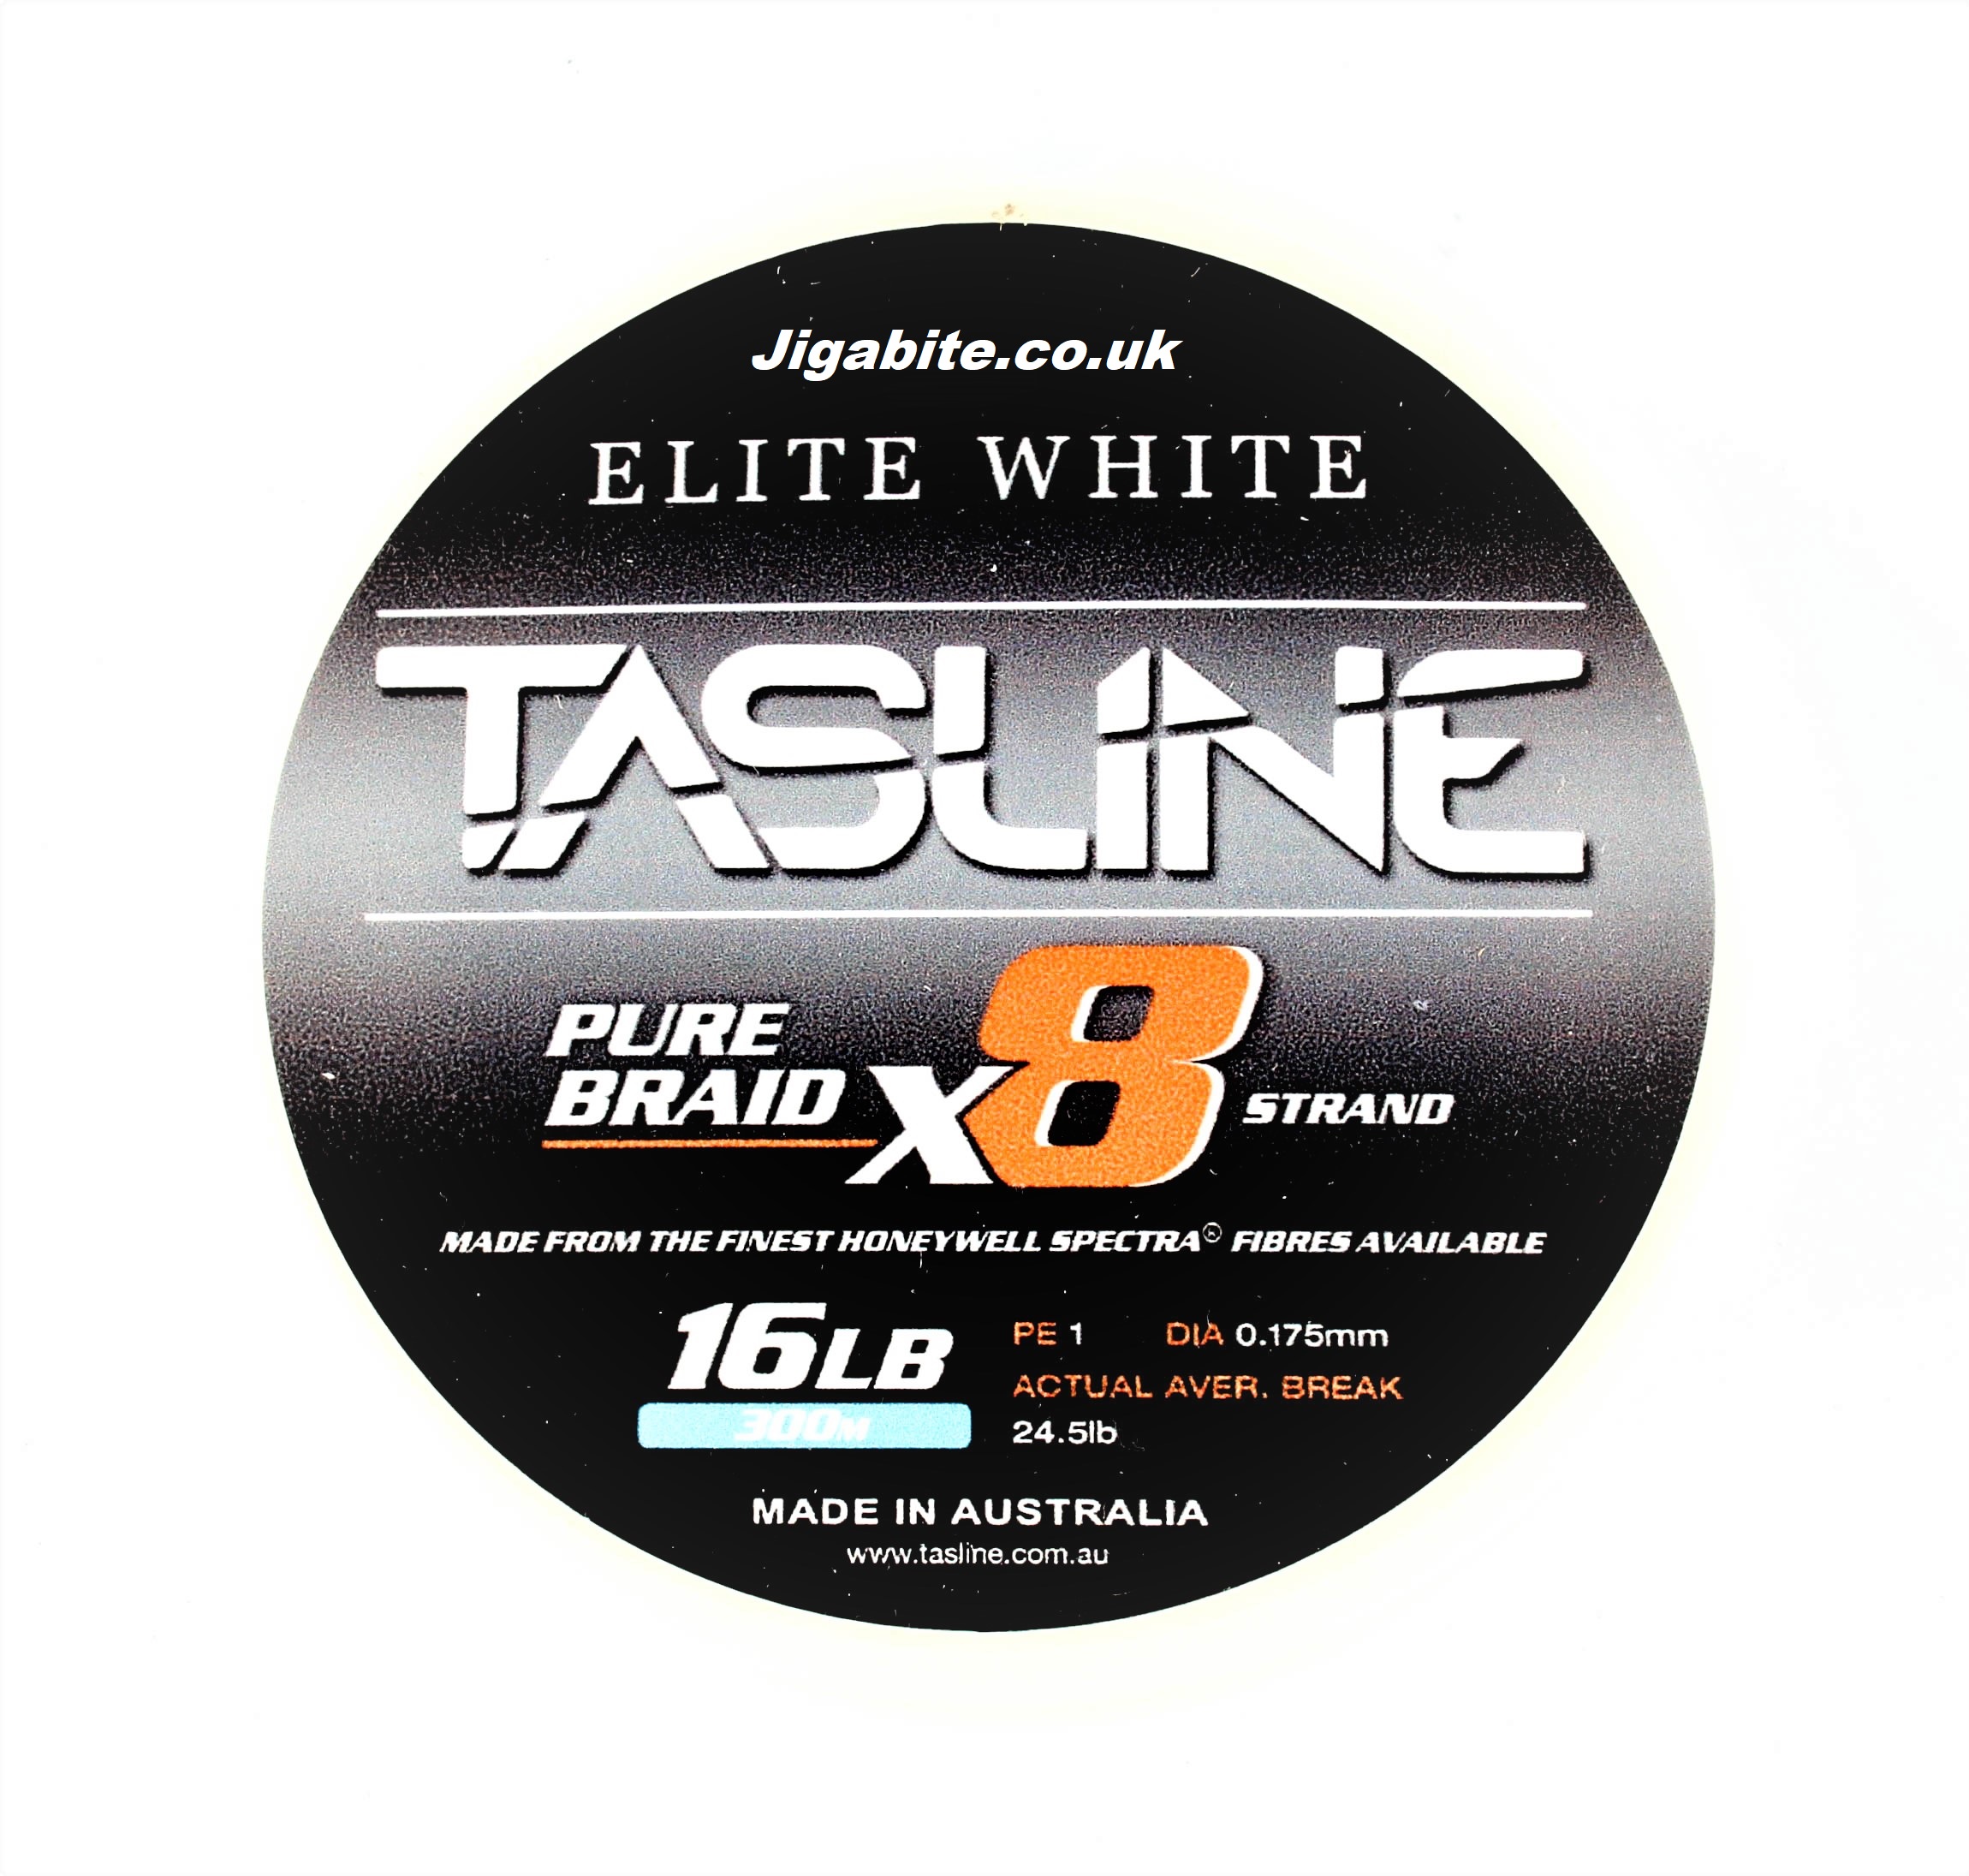 TASLINE Elite White X8 Pure Braid 100% Australian Made Braided Line